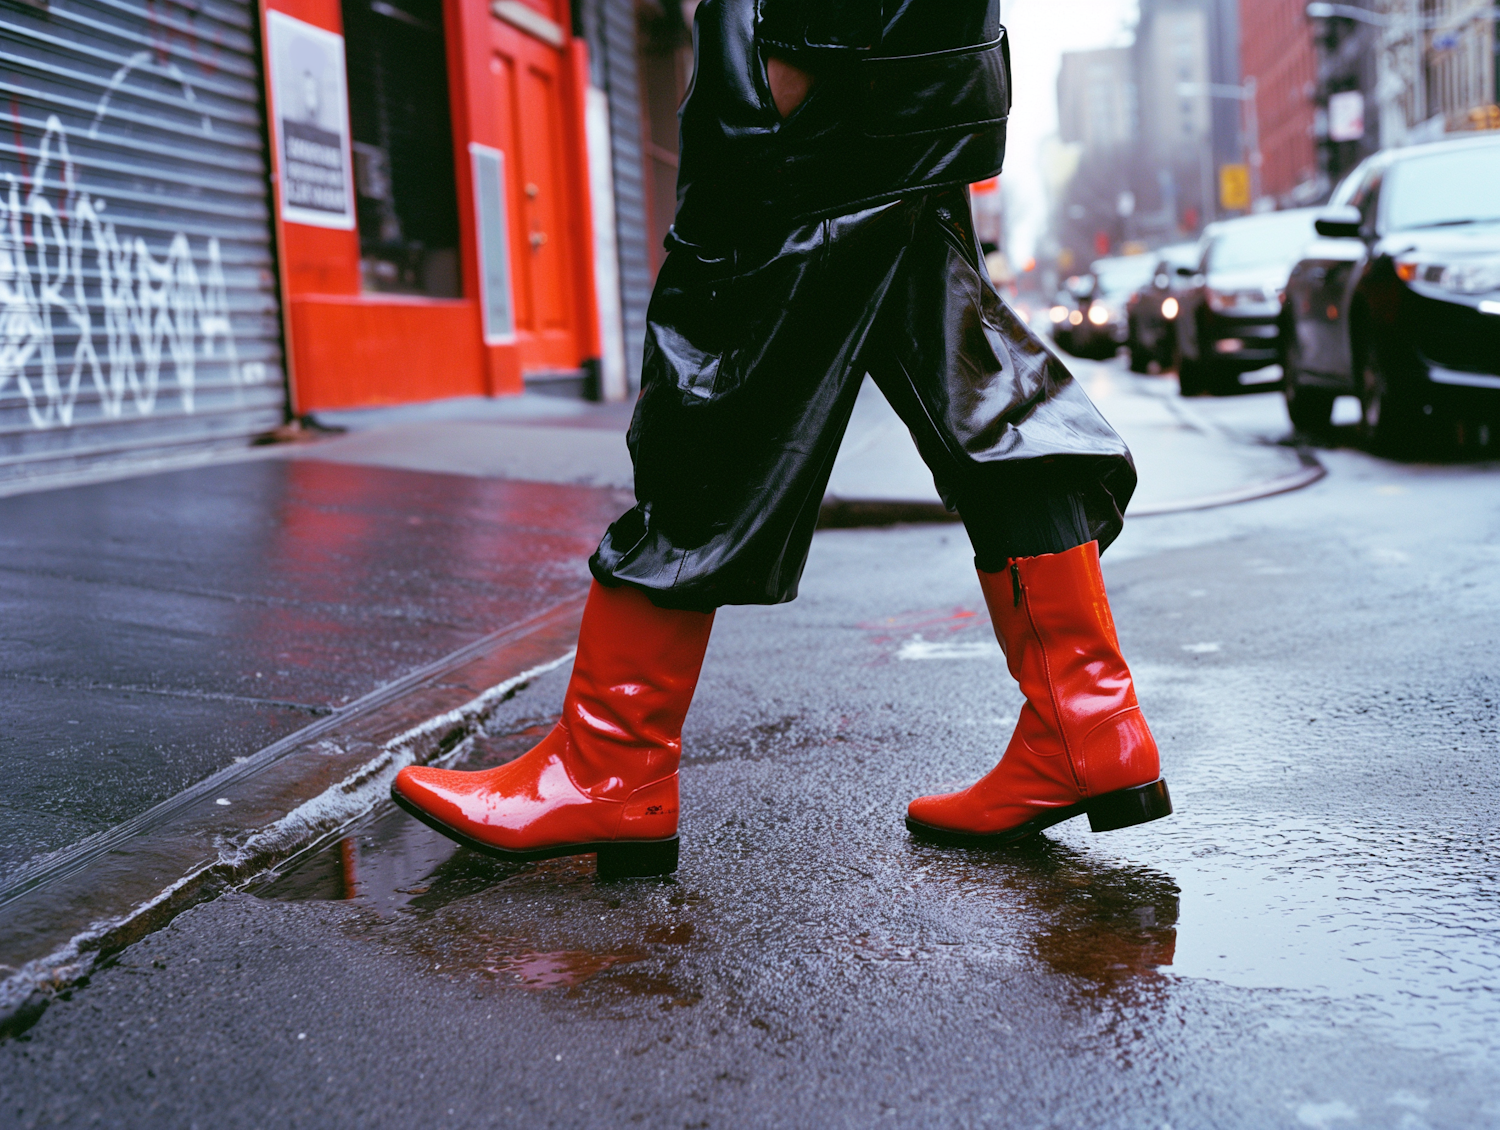 Striking Red Boots on Rainy Urban Street